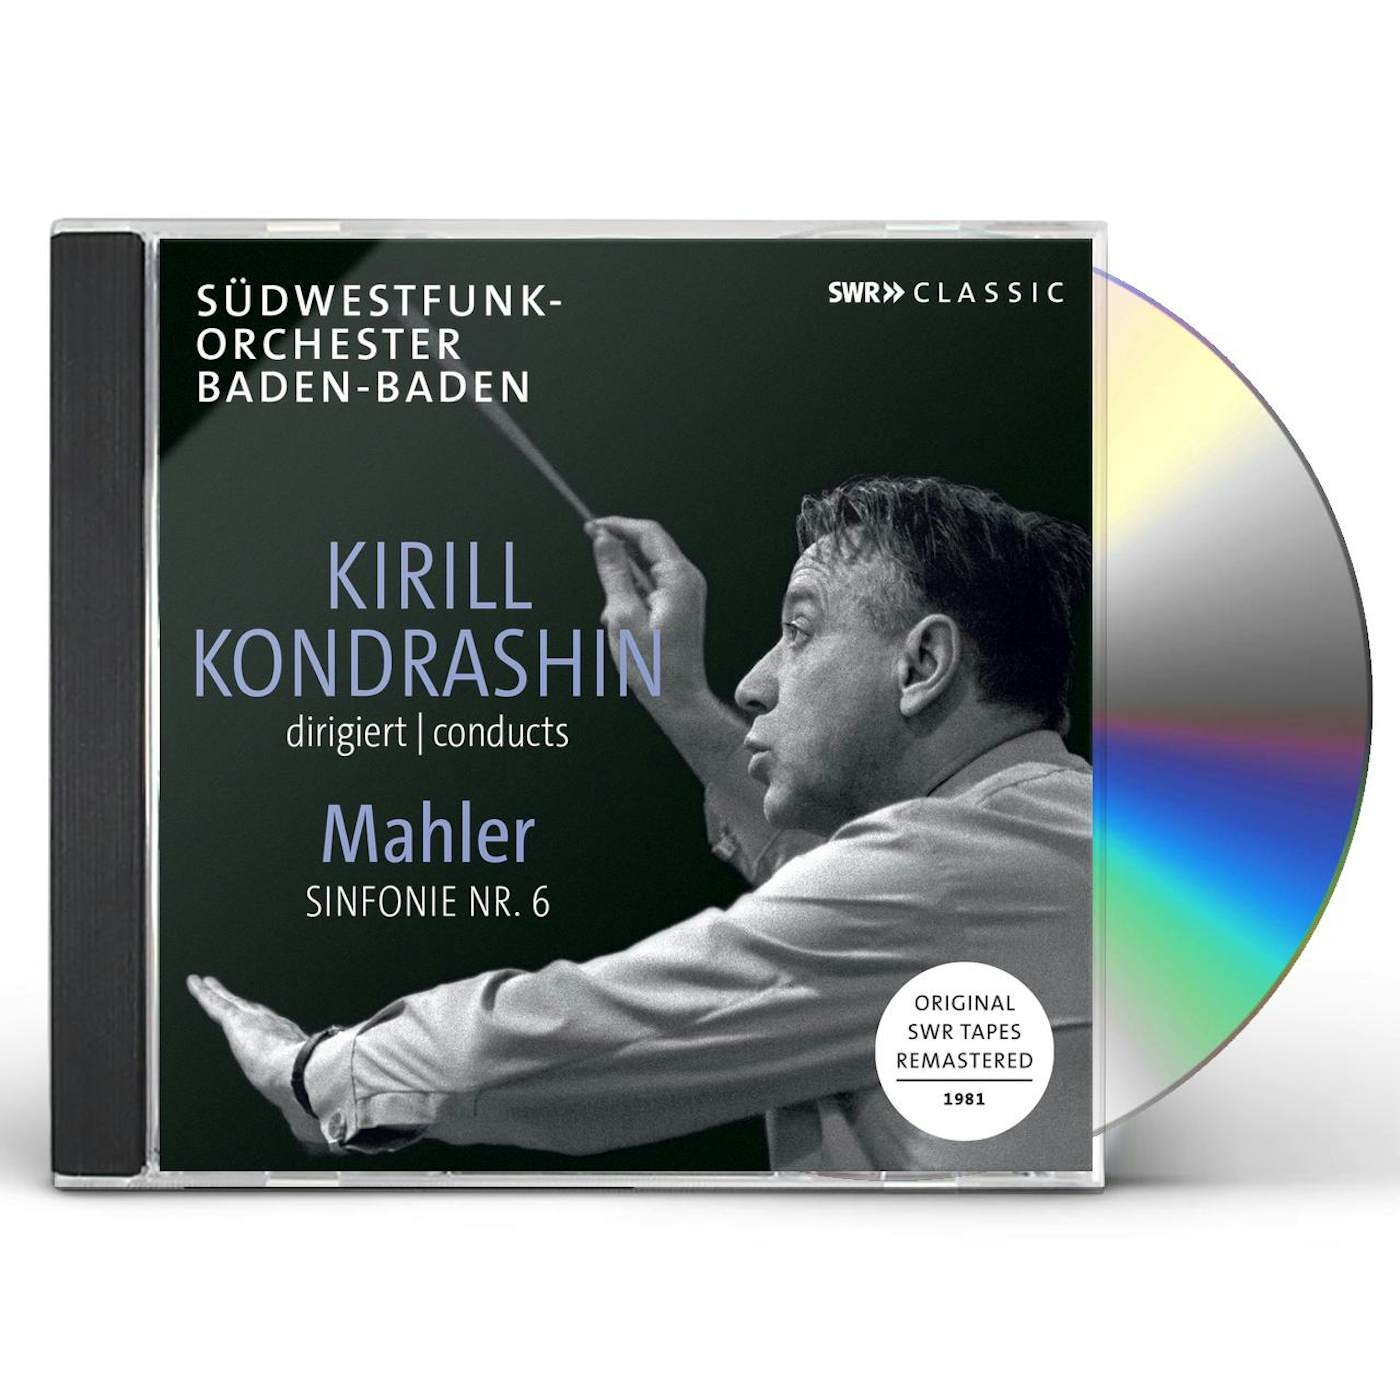 KIRILL KONDRASHIN CONDUCTS Gustav Mahler SYMPHONY 6 CD